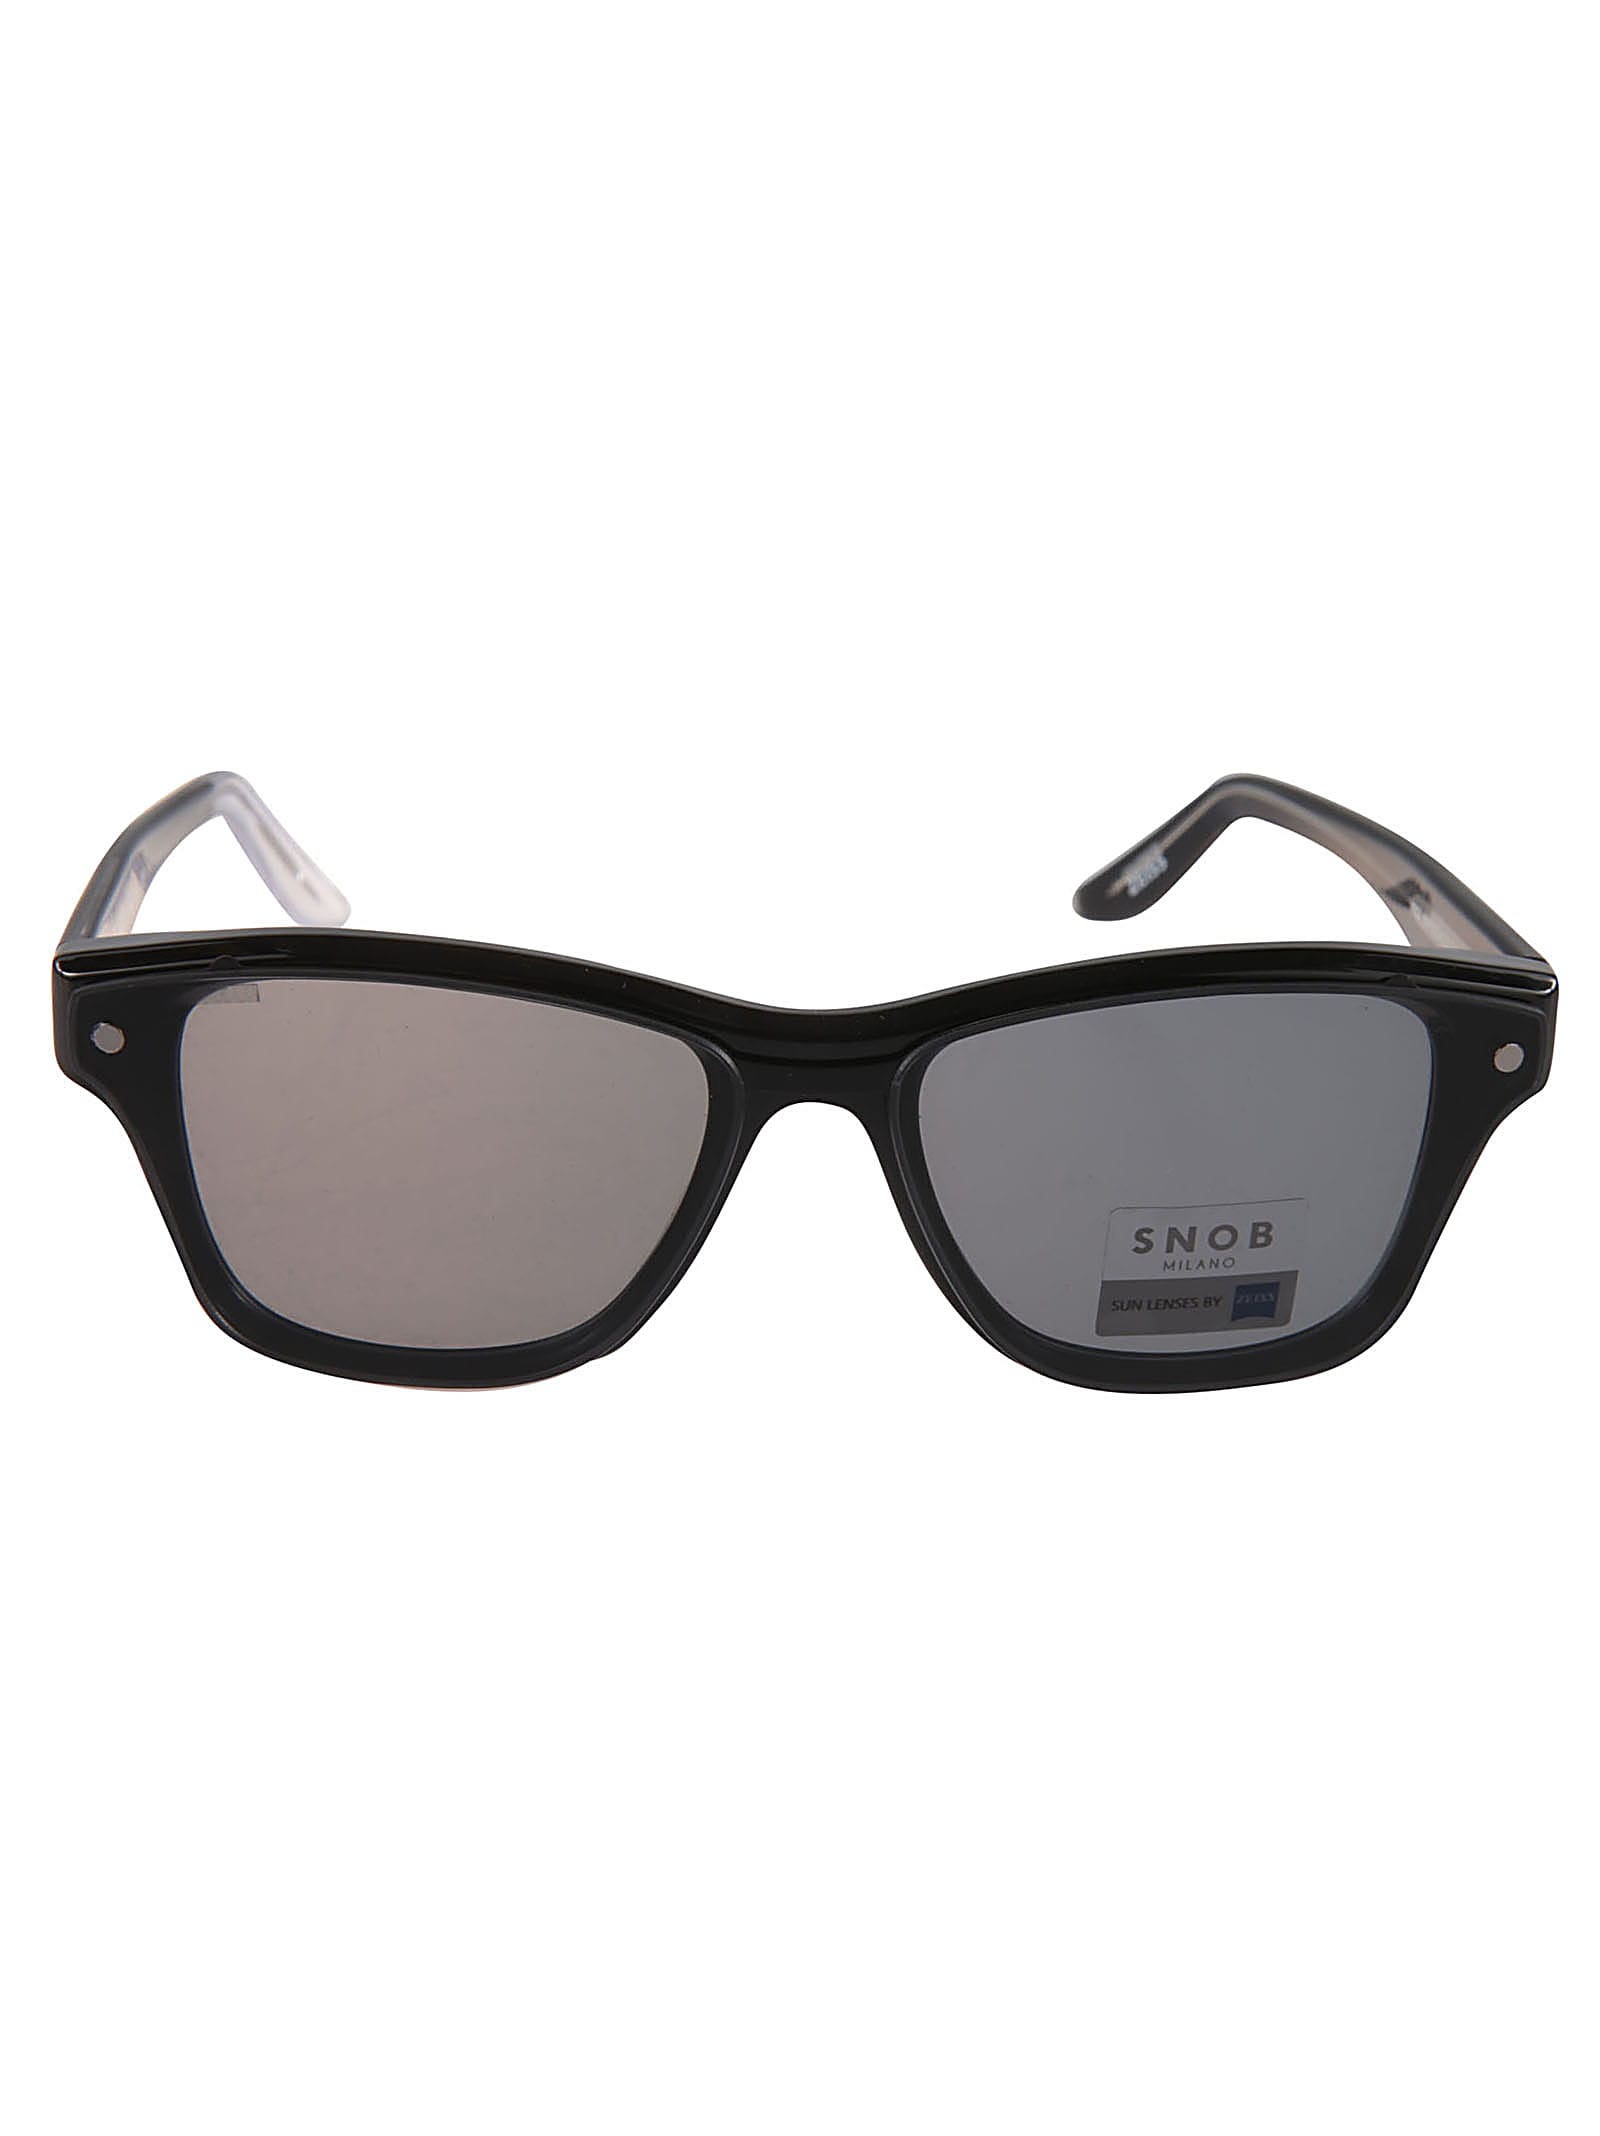 Snob Milano Removable Lens Square Frame Sunglasses